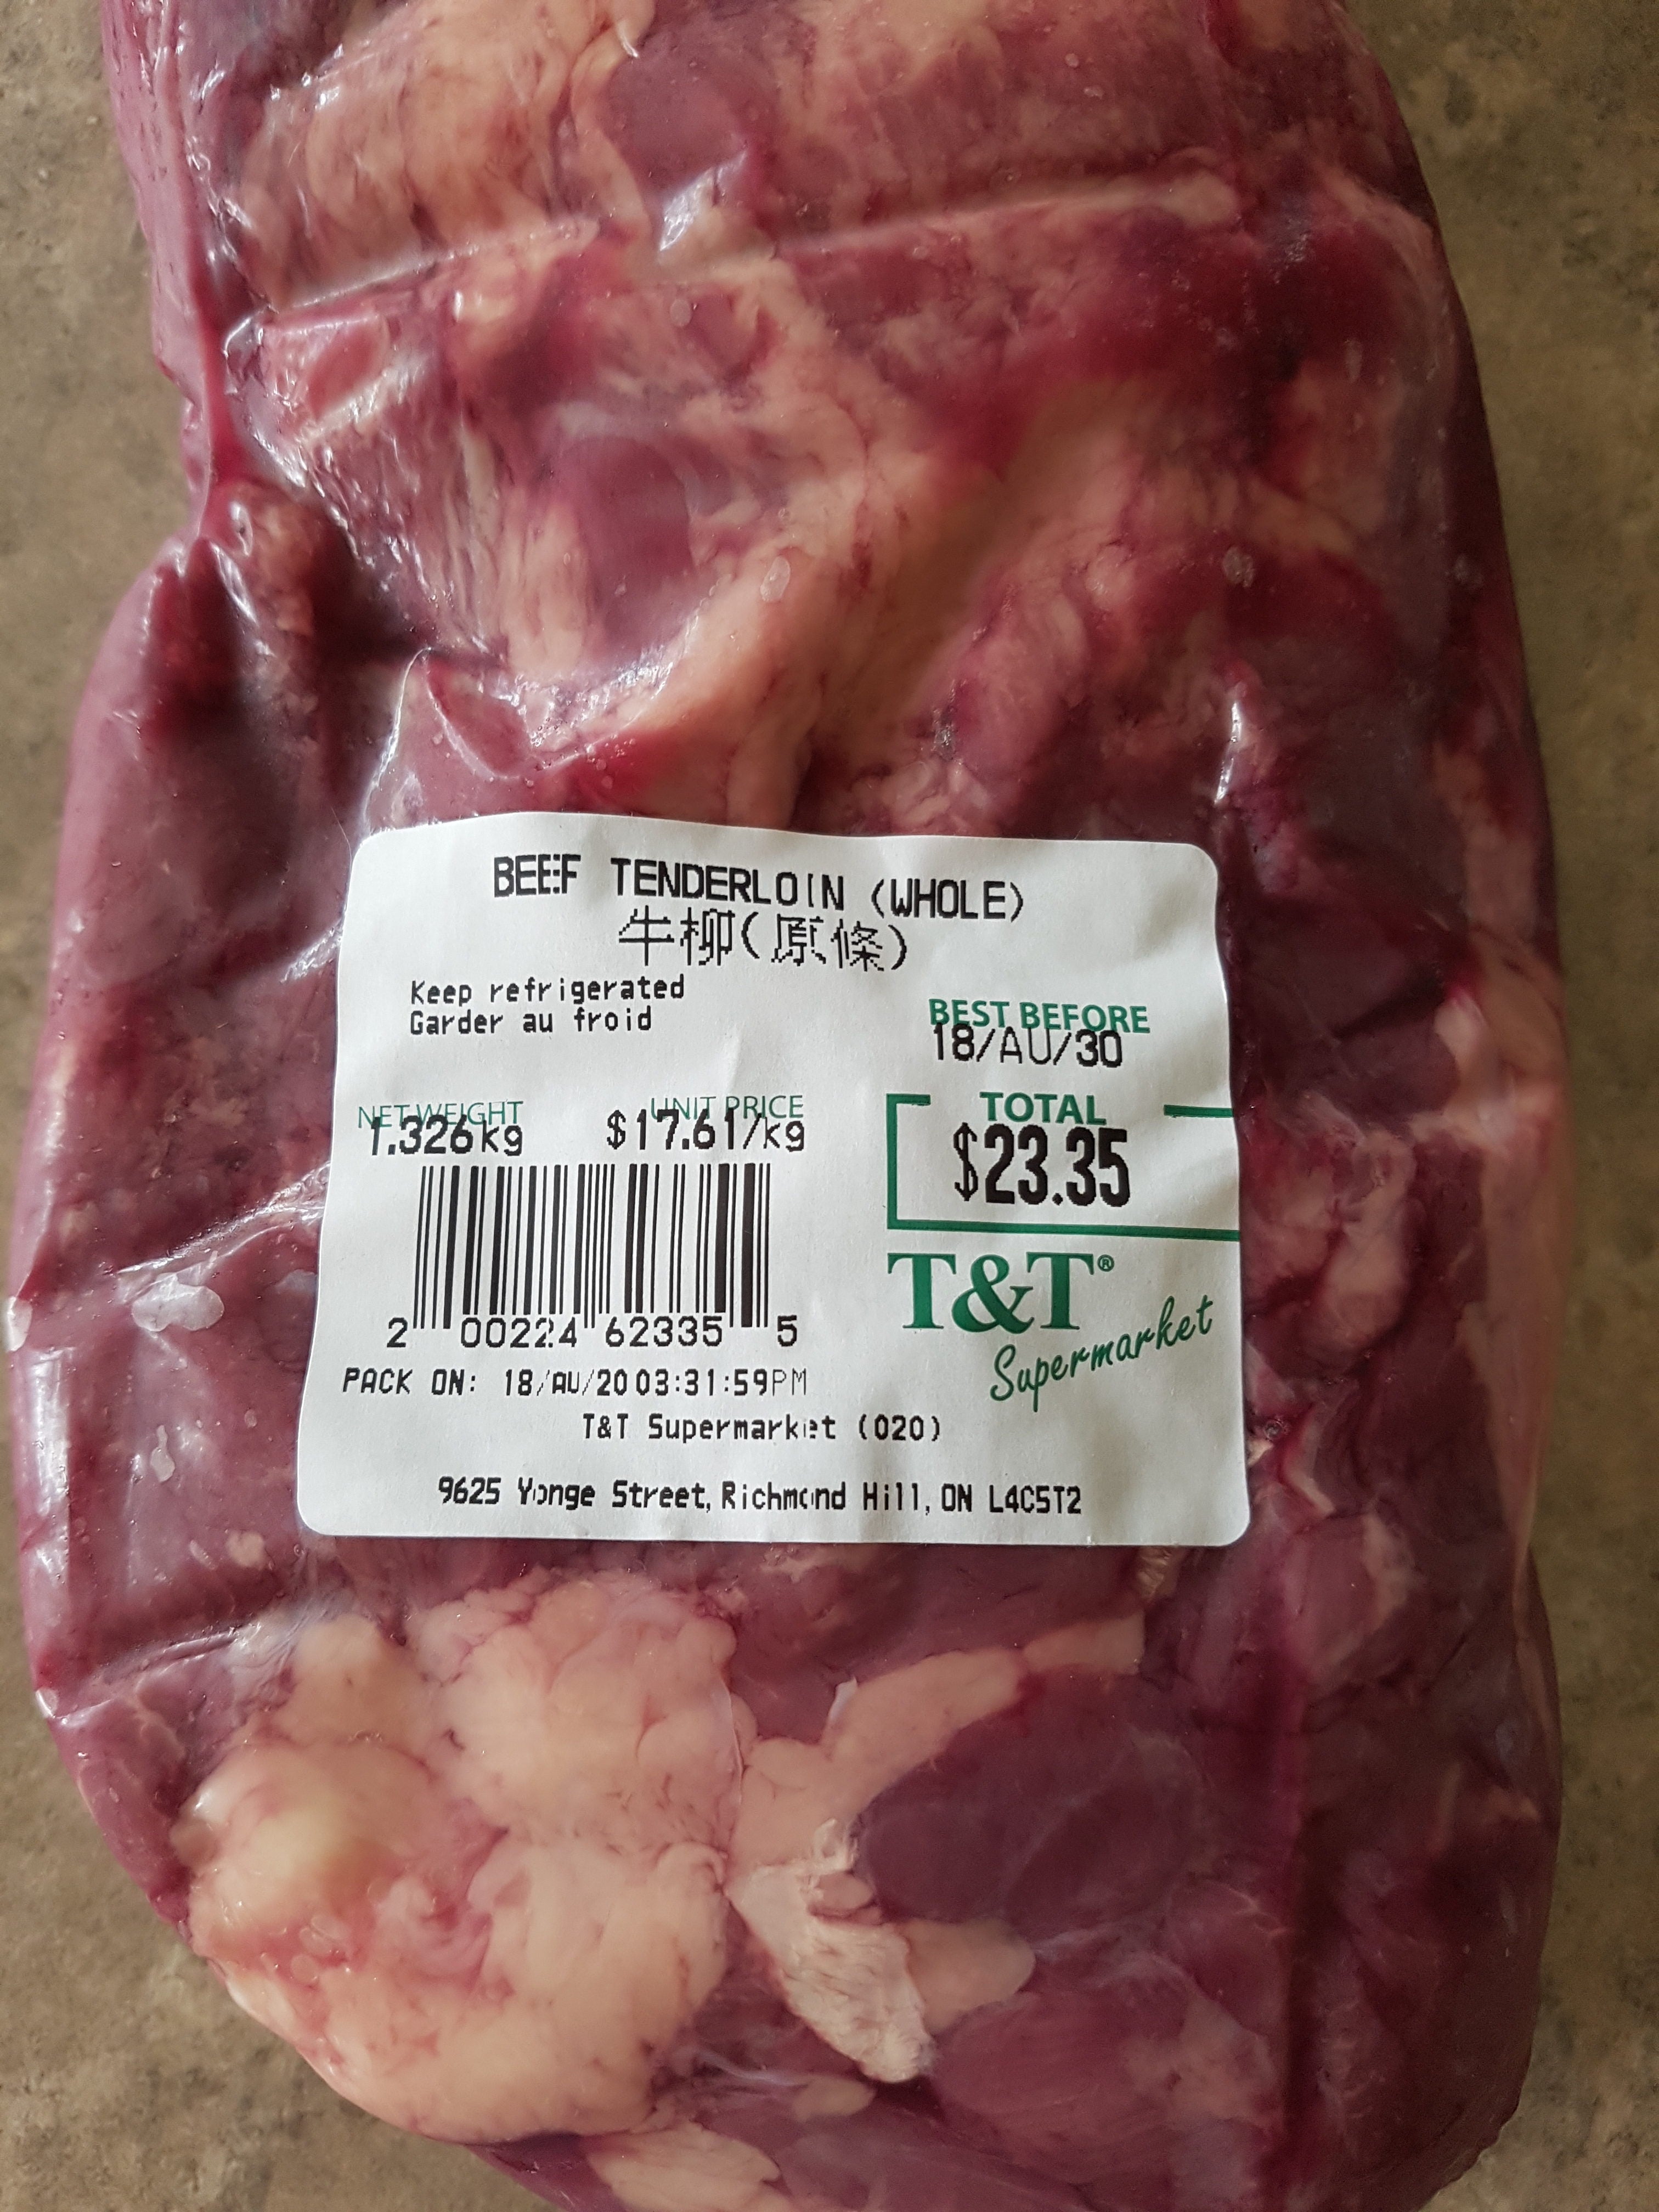 T&T Supermarket] Whole Beef Tenderloin - 7.99/lb - RedFlagDeals